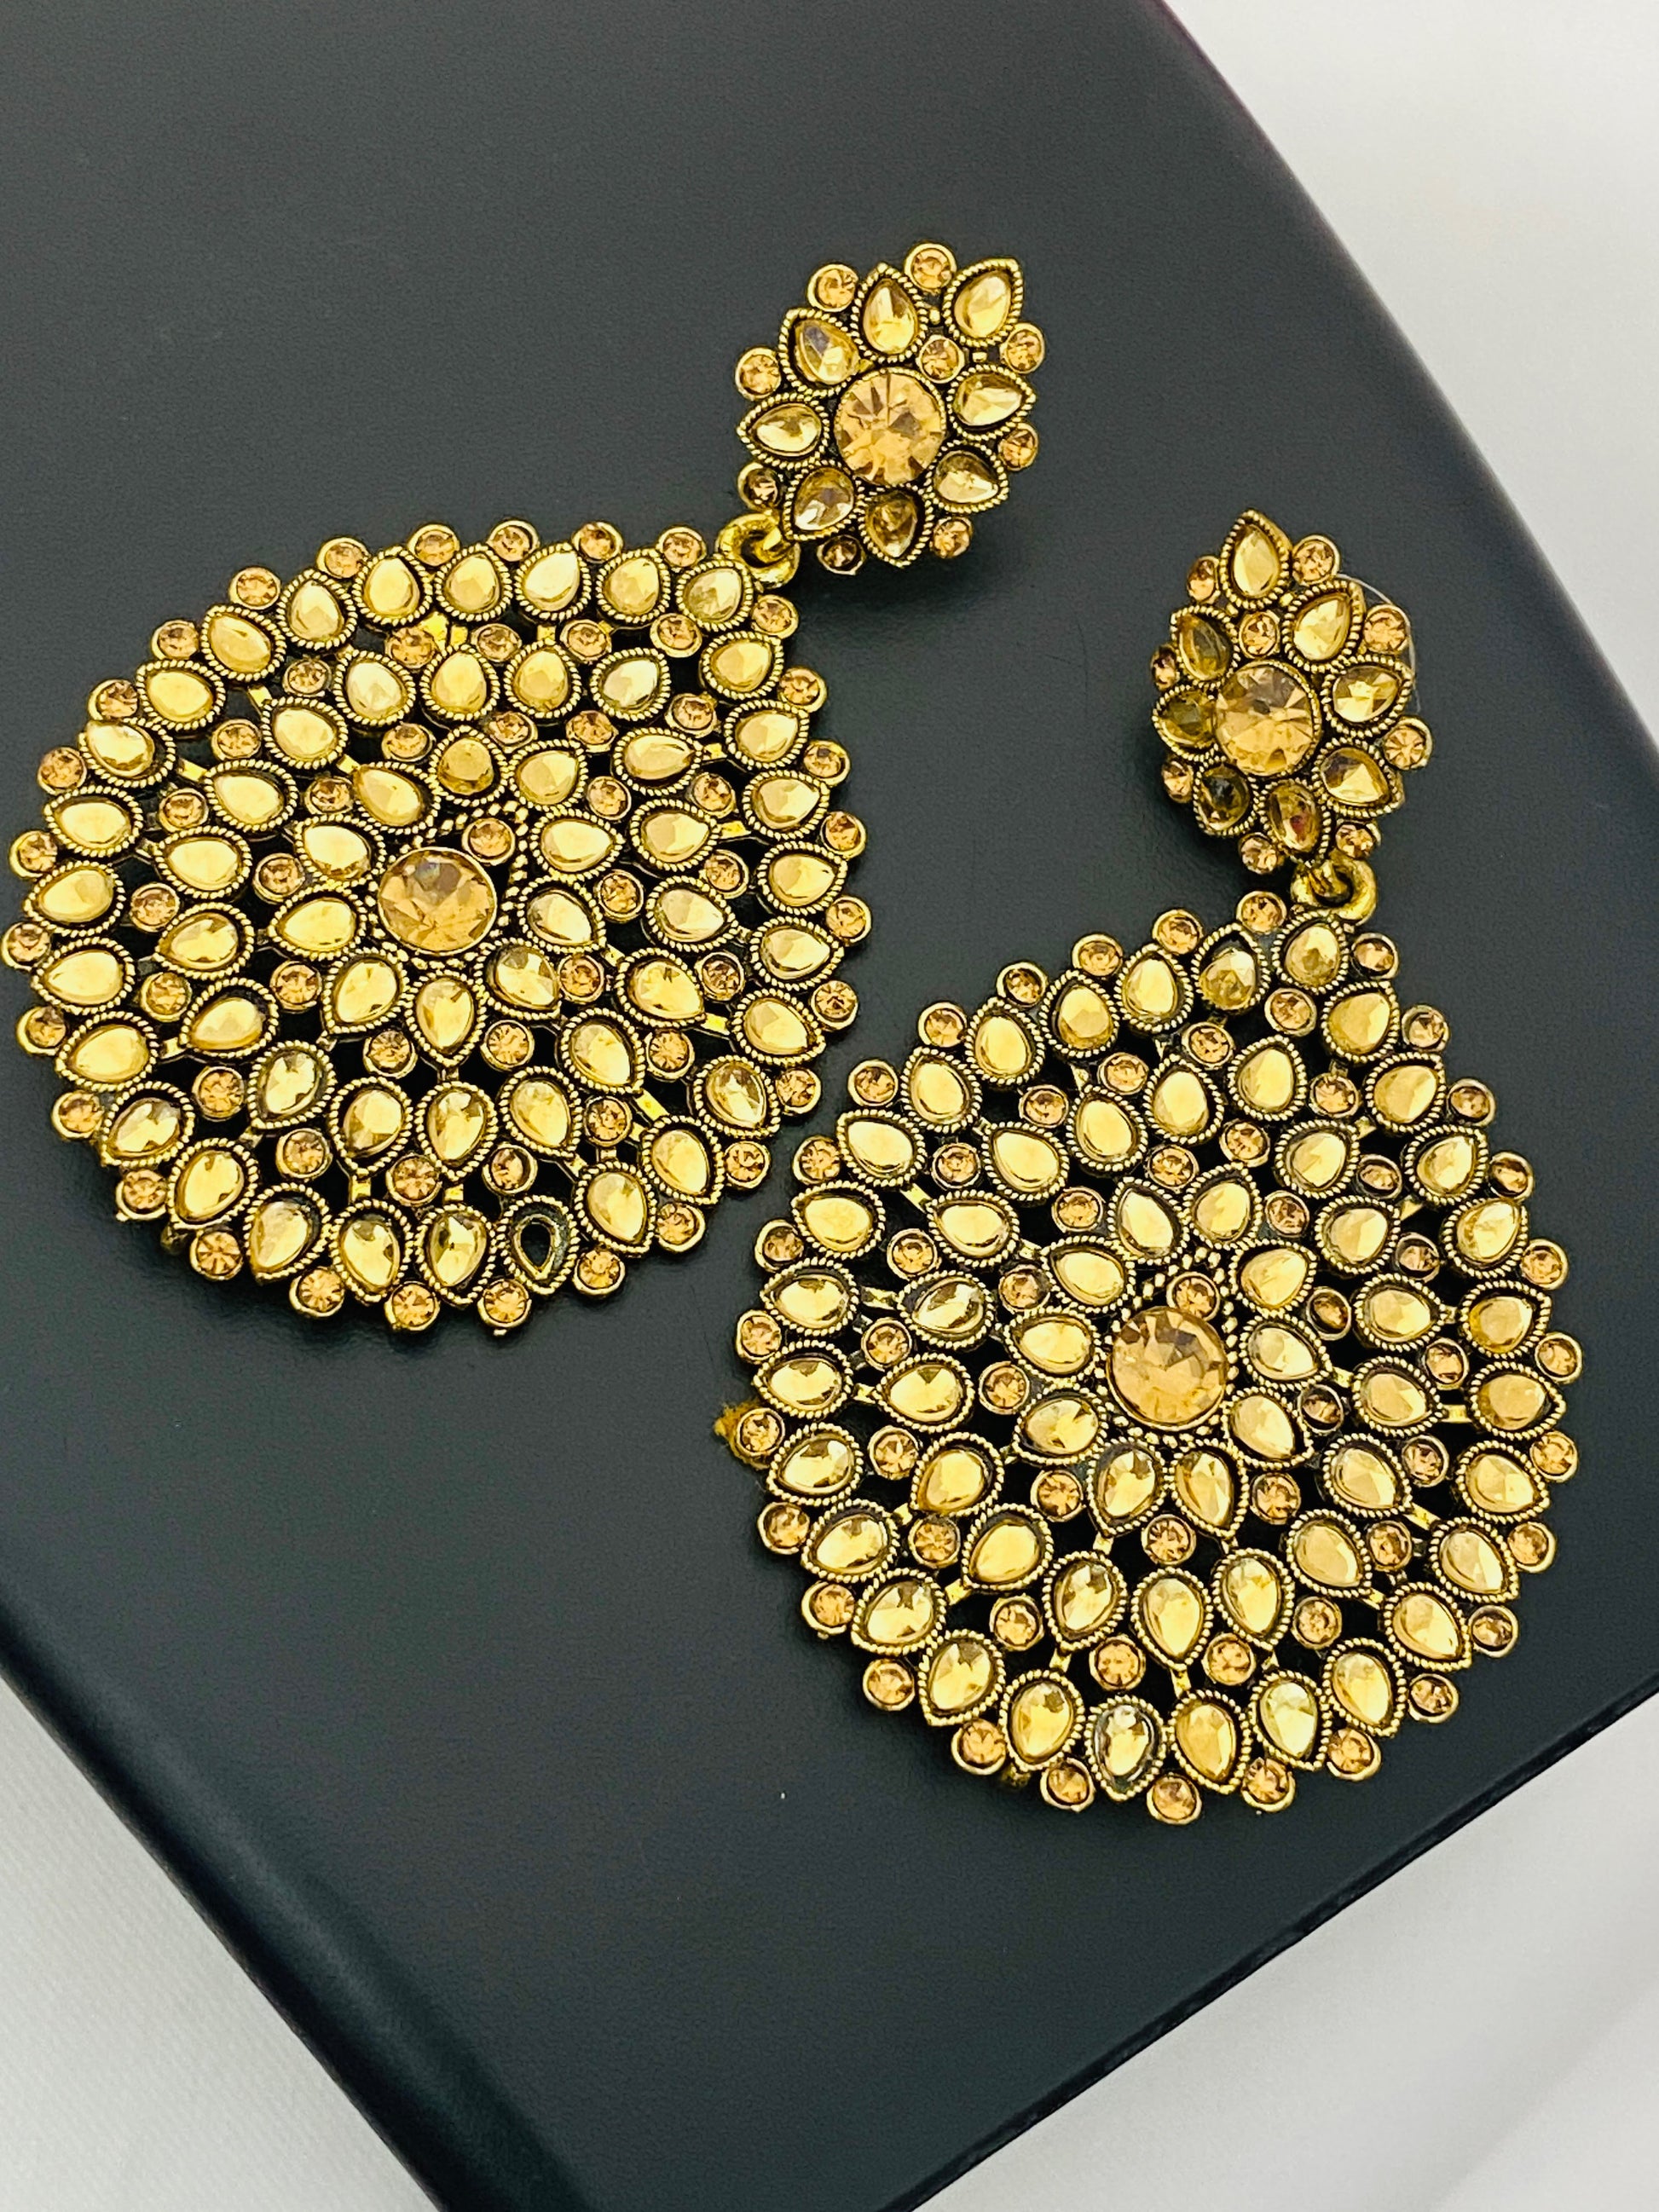  Gold Round Drop Earrings With Golden Stones In Sierra Vista